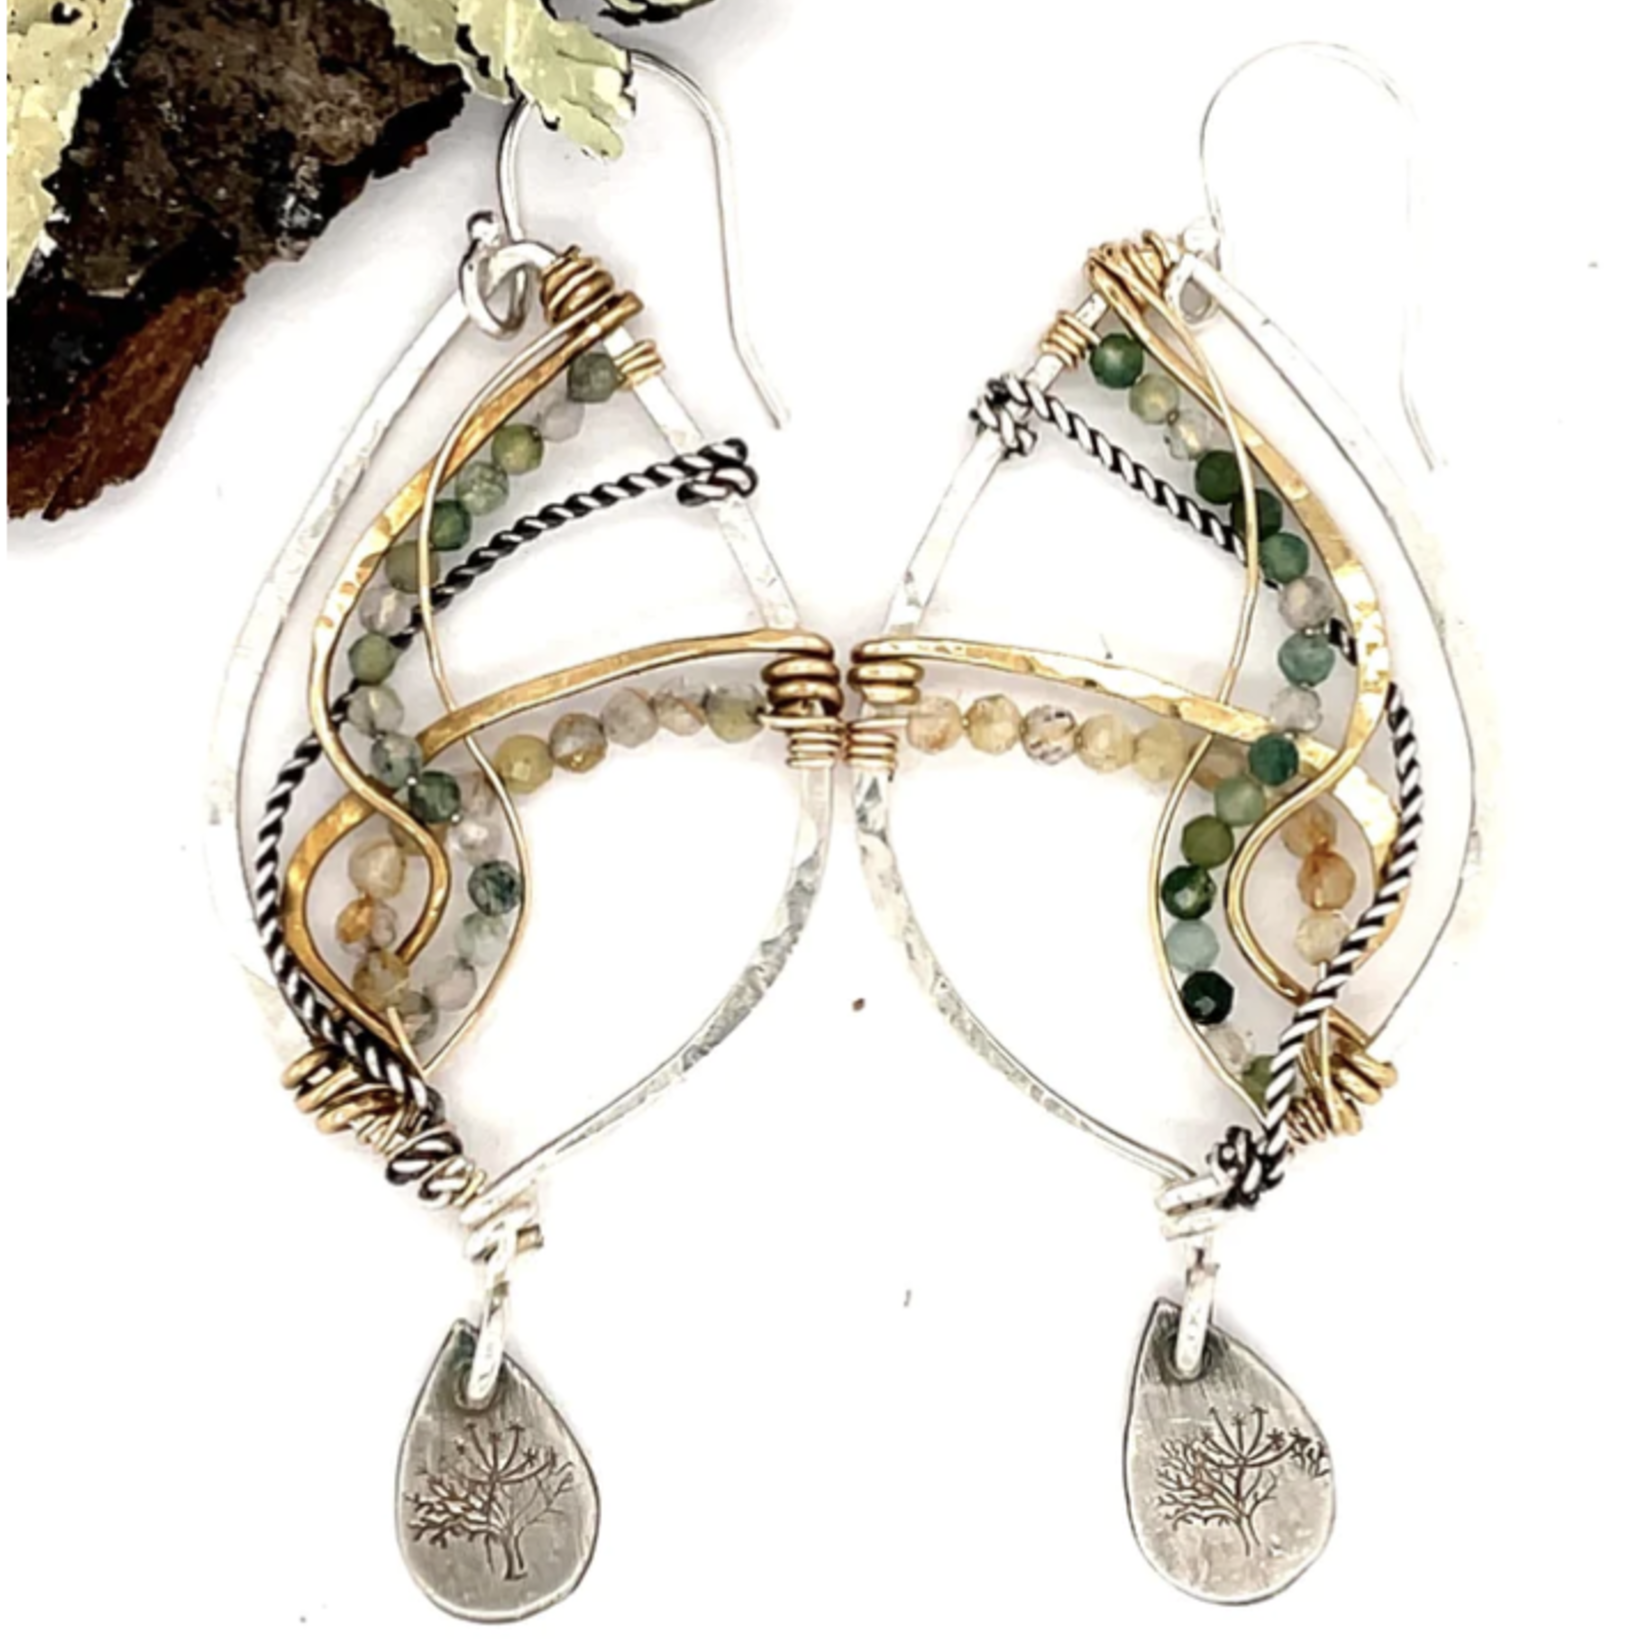 Handmade Dandelion Earrings by Art by Any Means